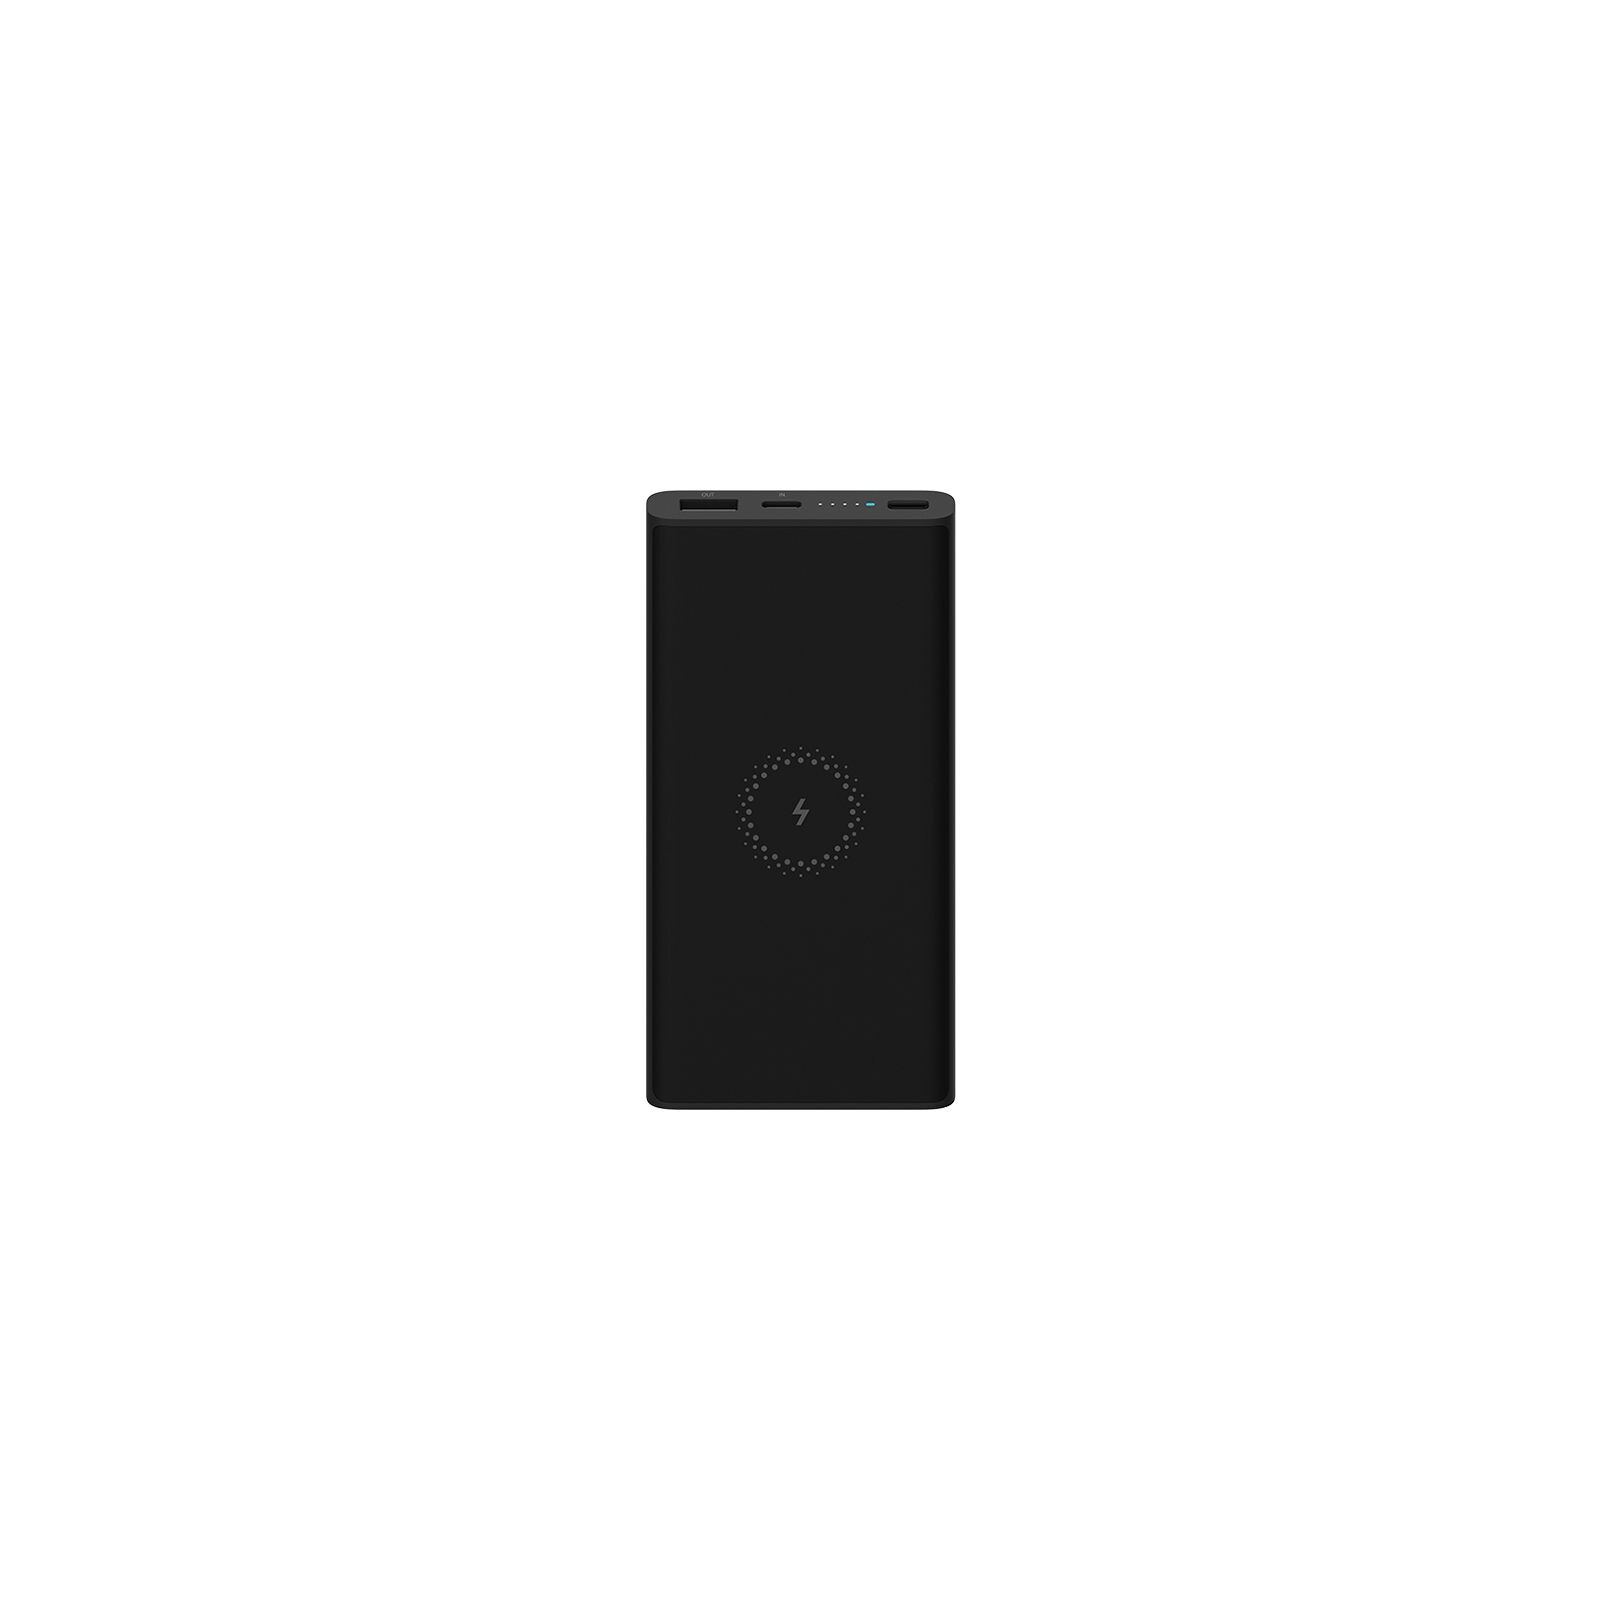 Батарея універсальна Xiaomi Mi Wireless Youth Edition 10000 mAh Black (562529)